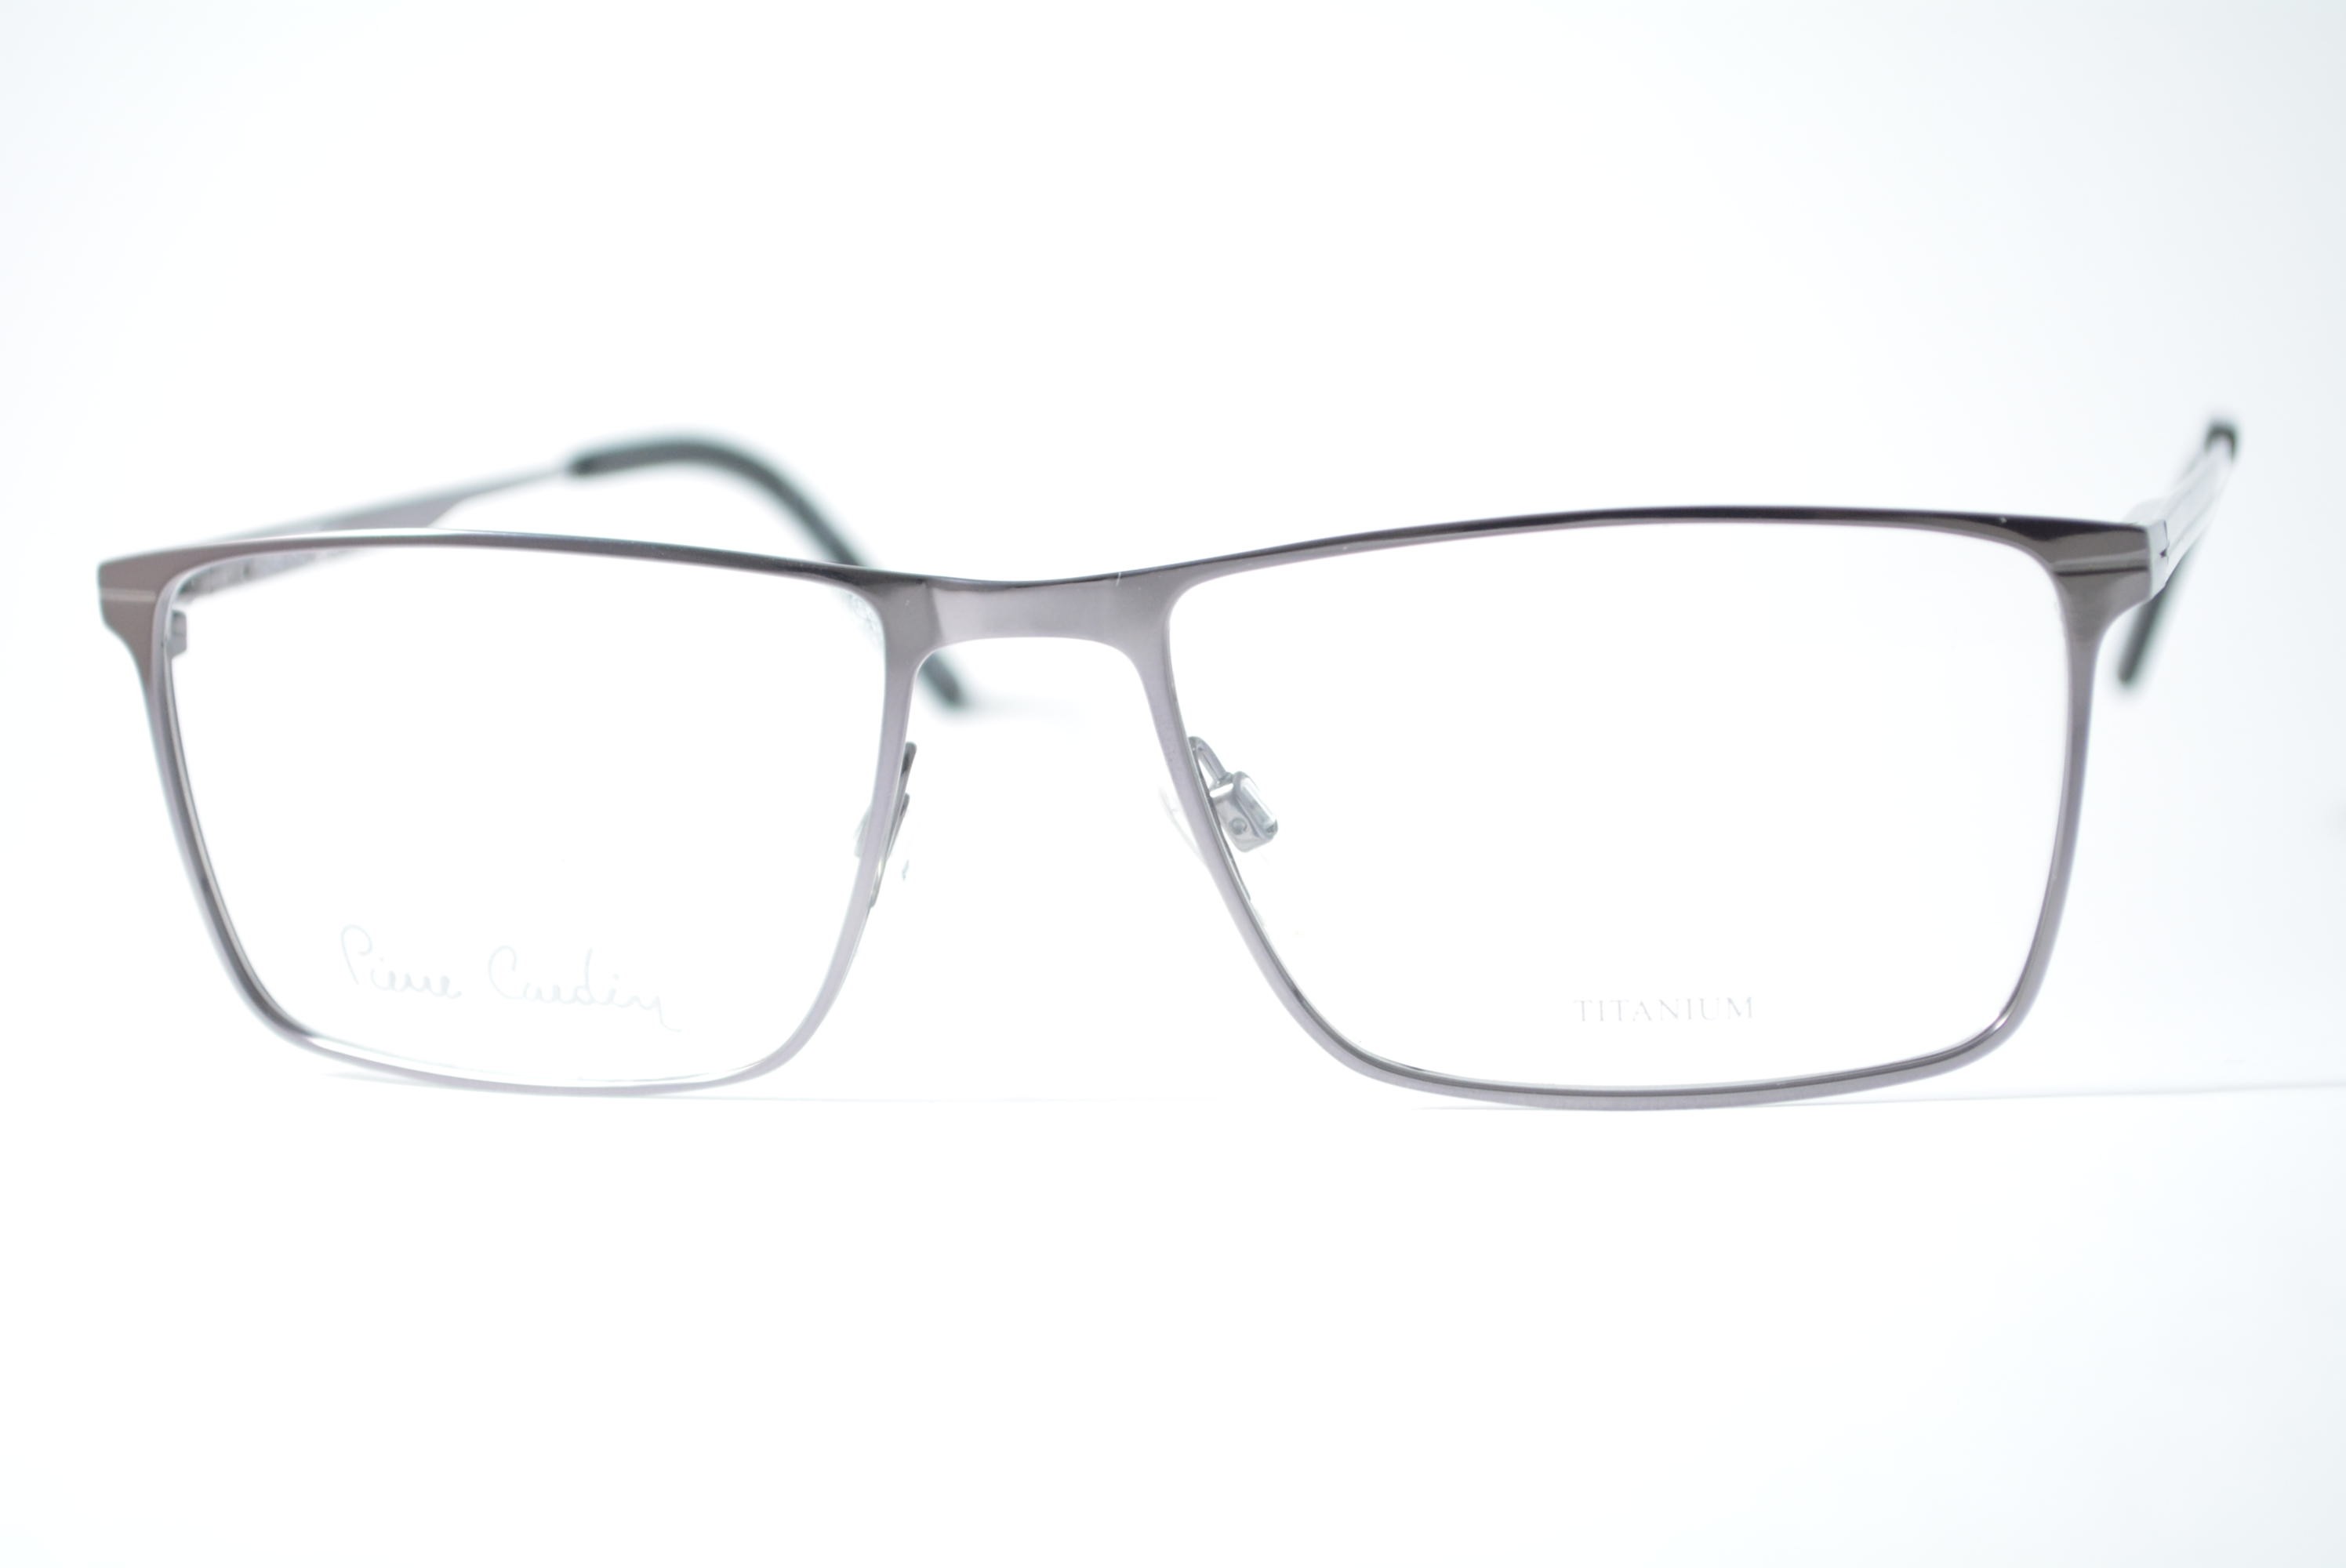 armação de óculos Pierre Cardin mod pc6879 kj1